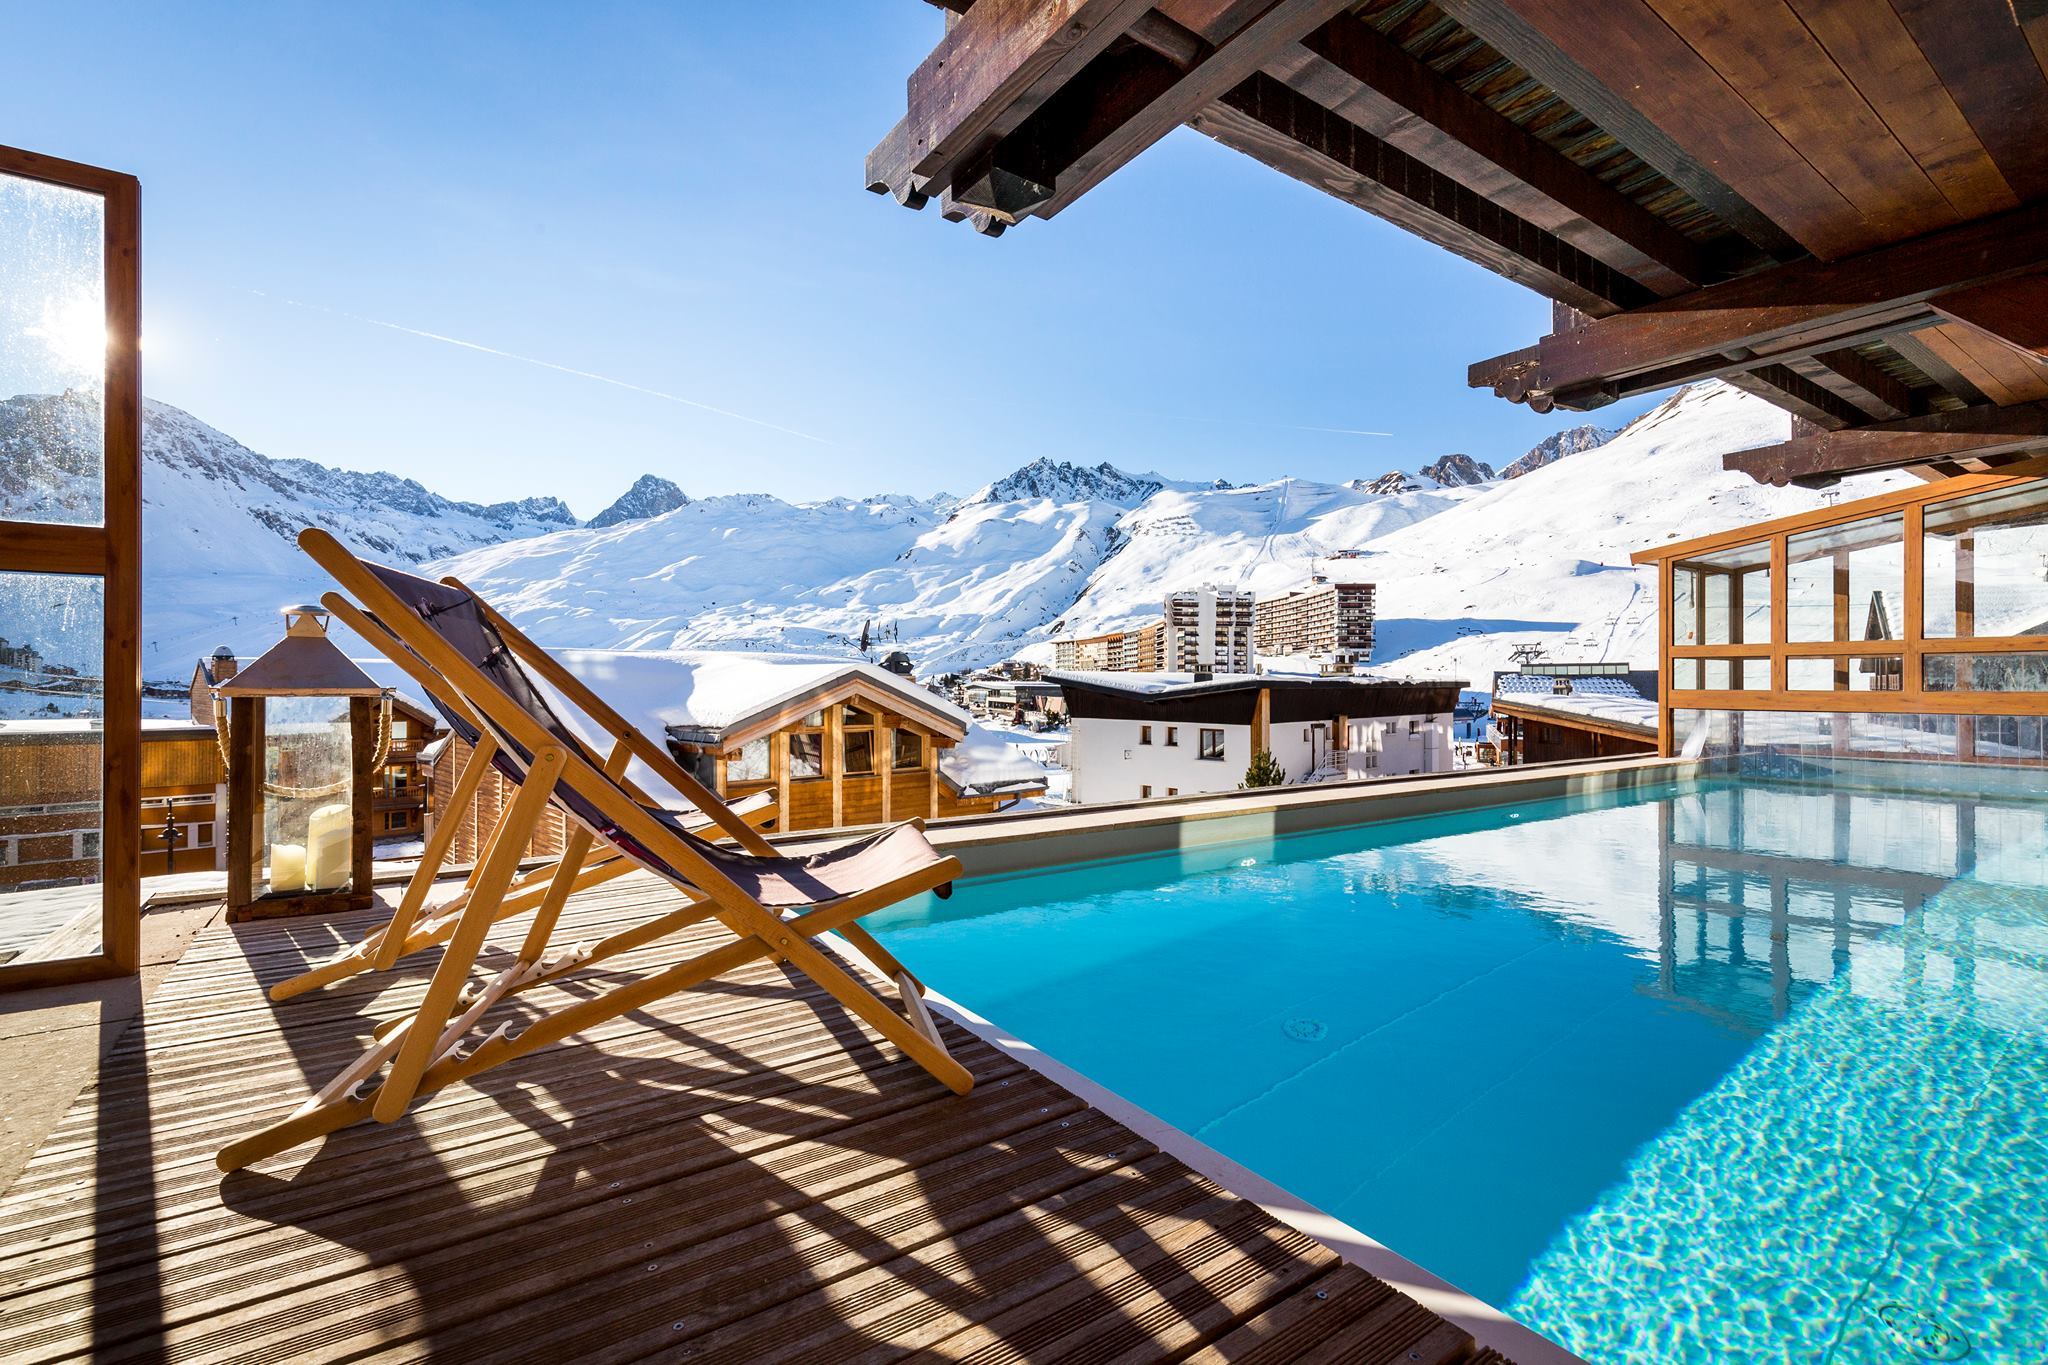 La piscina climatizada del hôtel Les Campanules, en Tignes, la estación de los Alpes franceses.